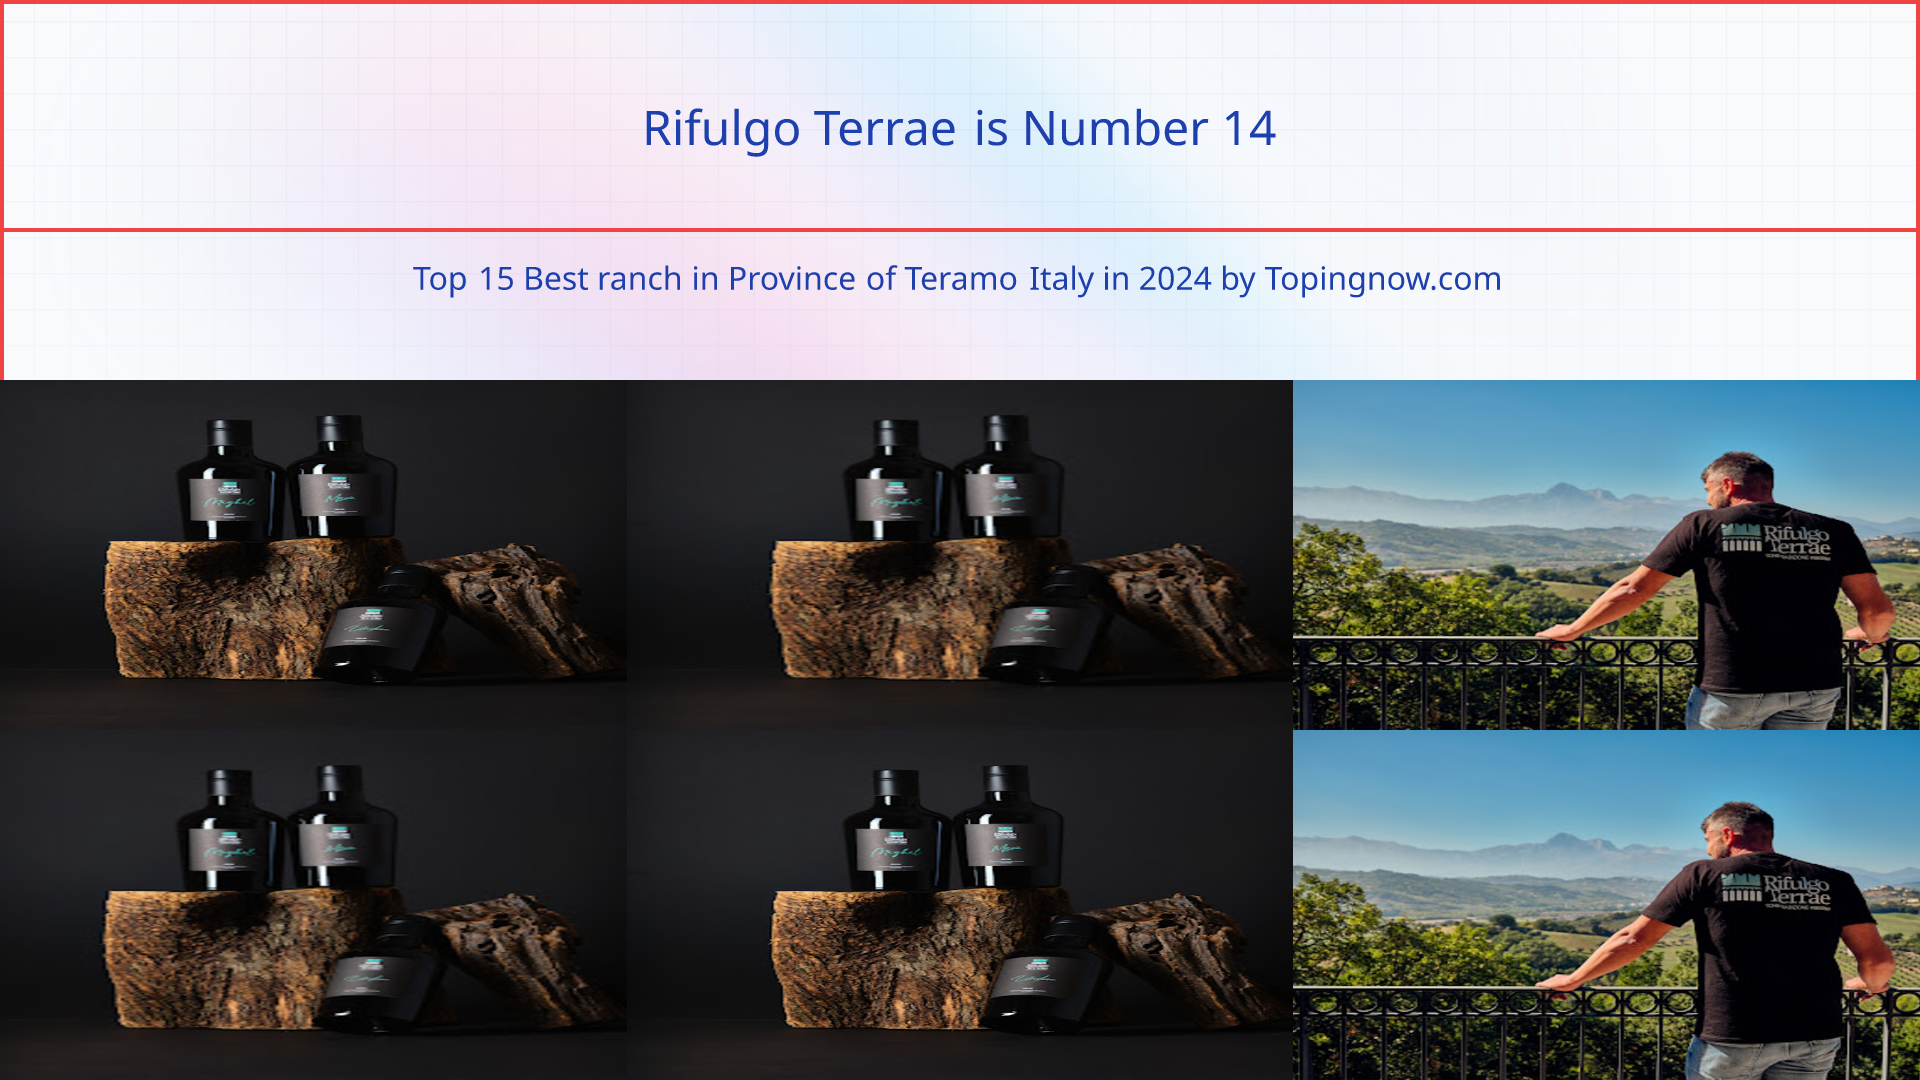 Rifulgo Terrae: Top 15 Best ranch in Province of Teramo Italy in 2024